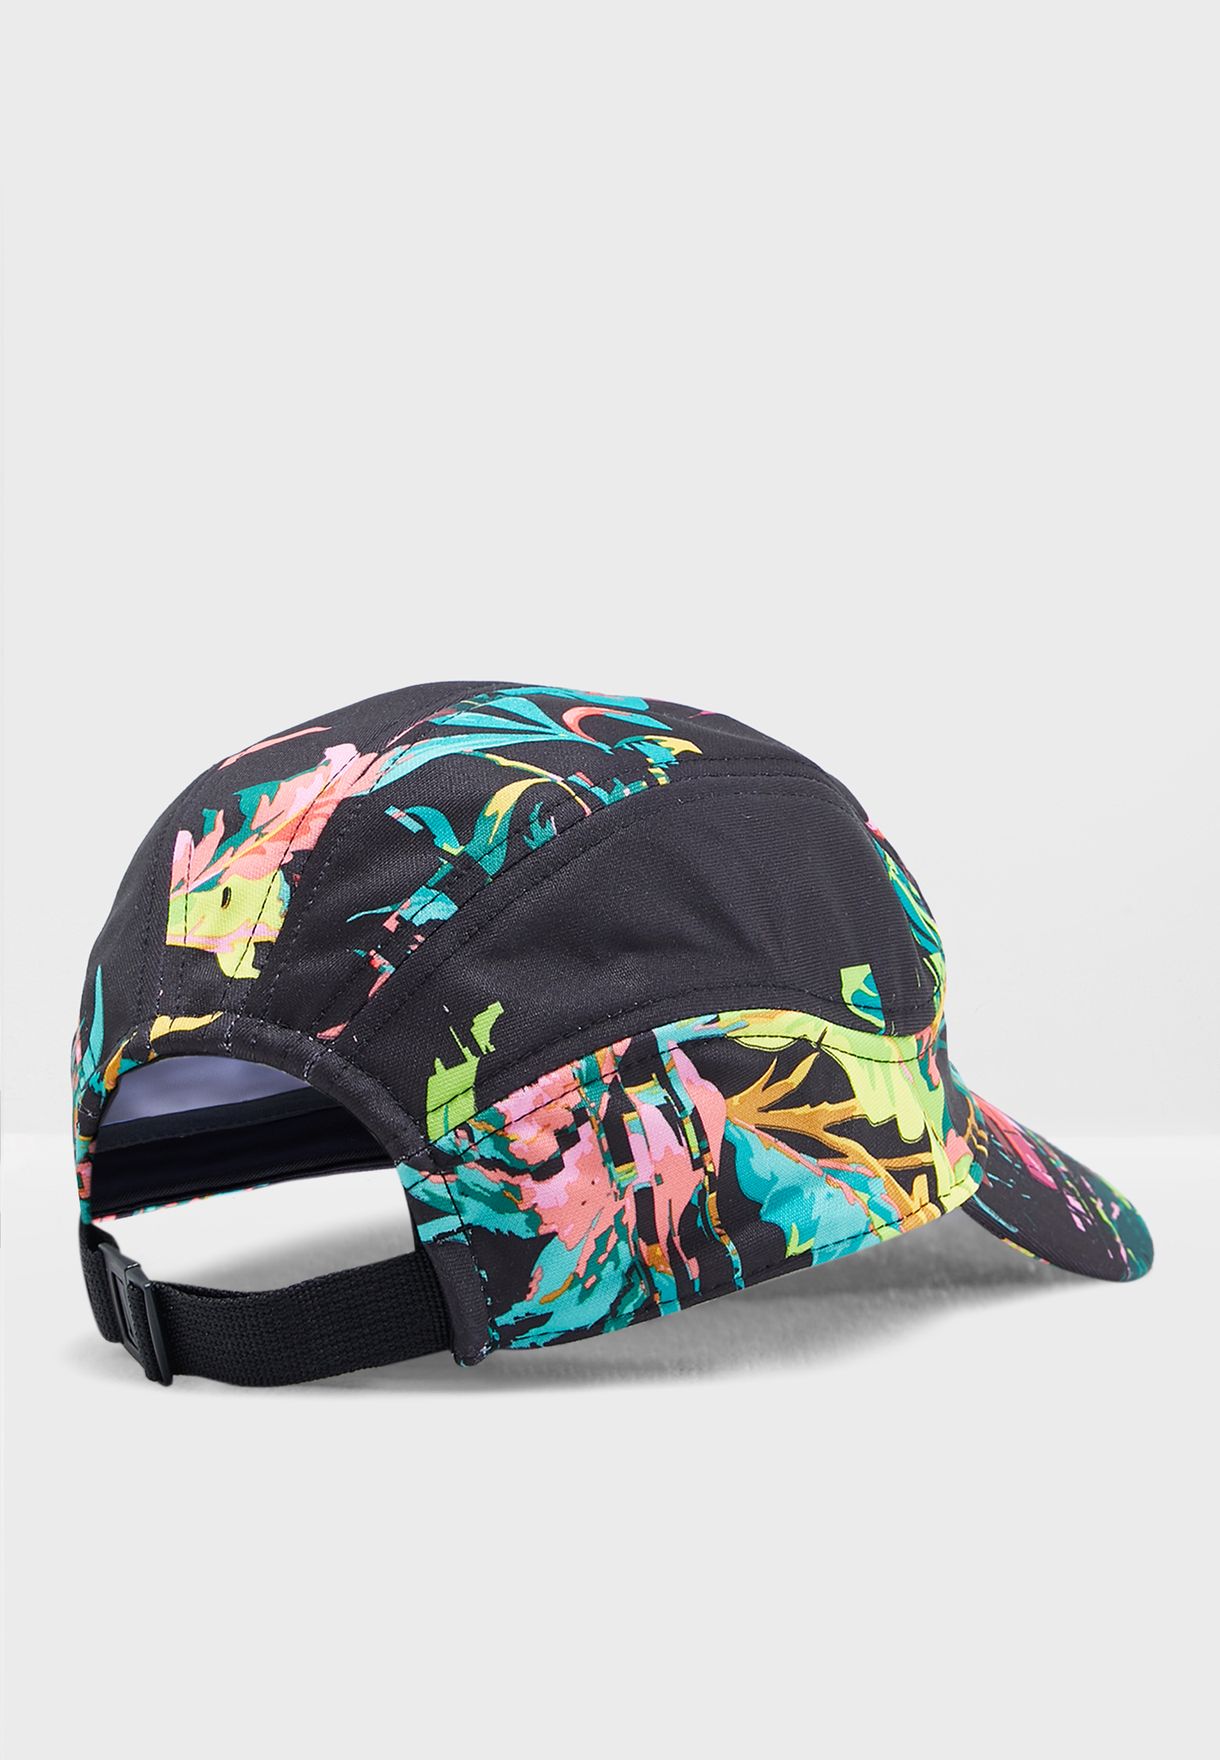 nike tailwind floral cap